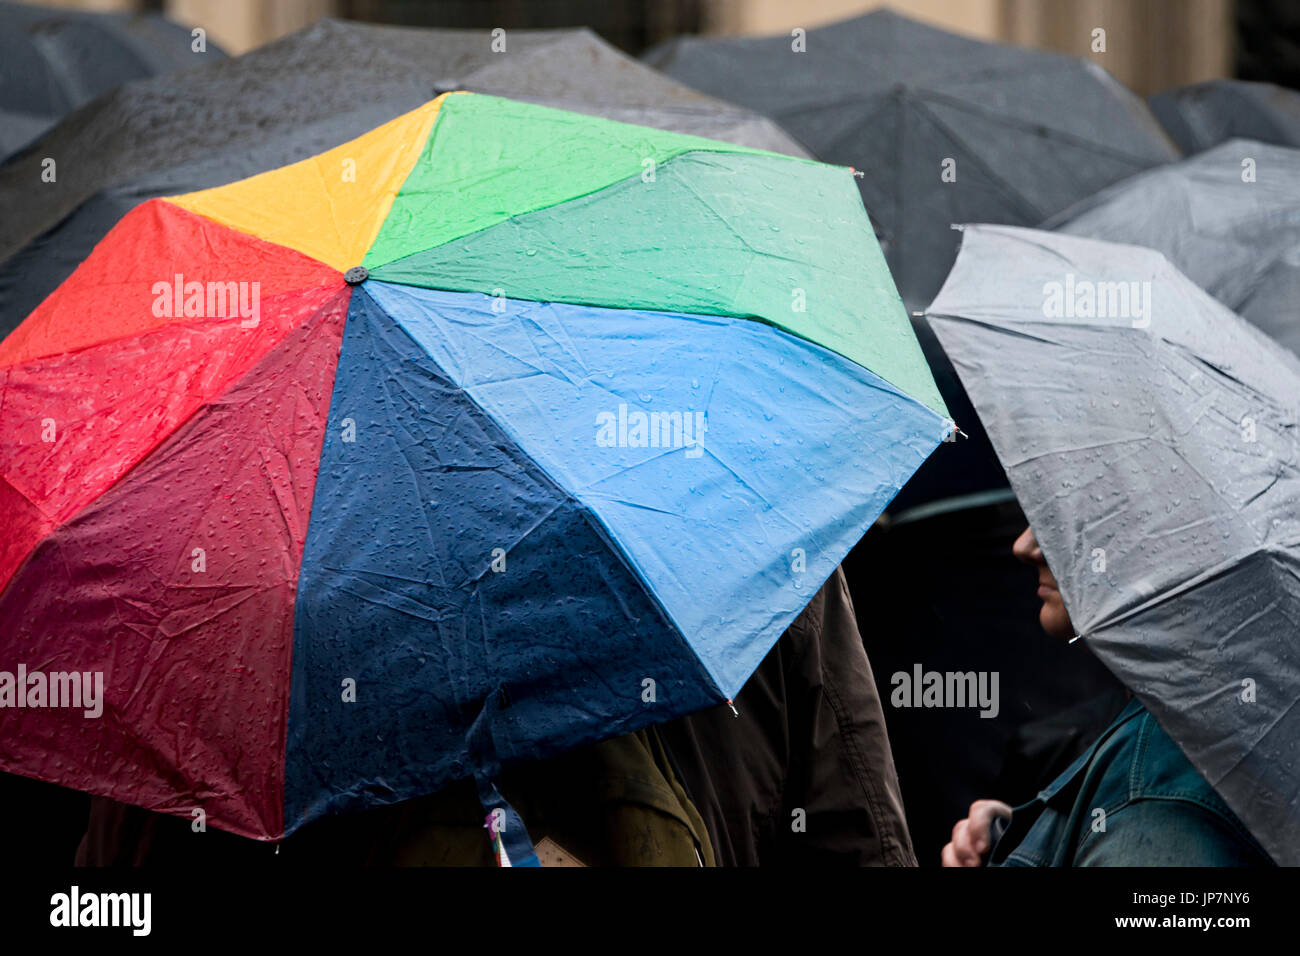 Horizontalen Blick auf einen bunten Regenschirm unter vielen schwarzen Schirmen im Regen. Stockfoto